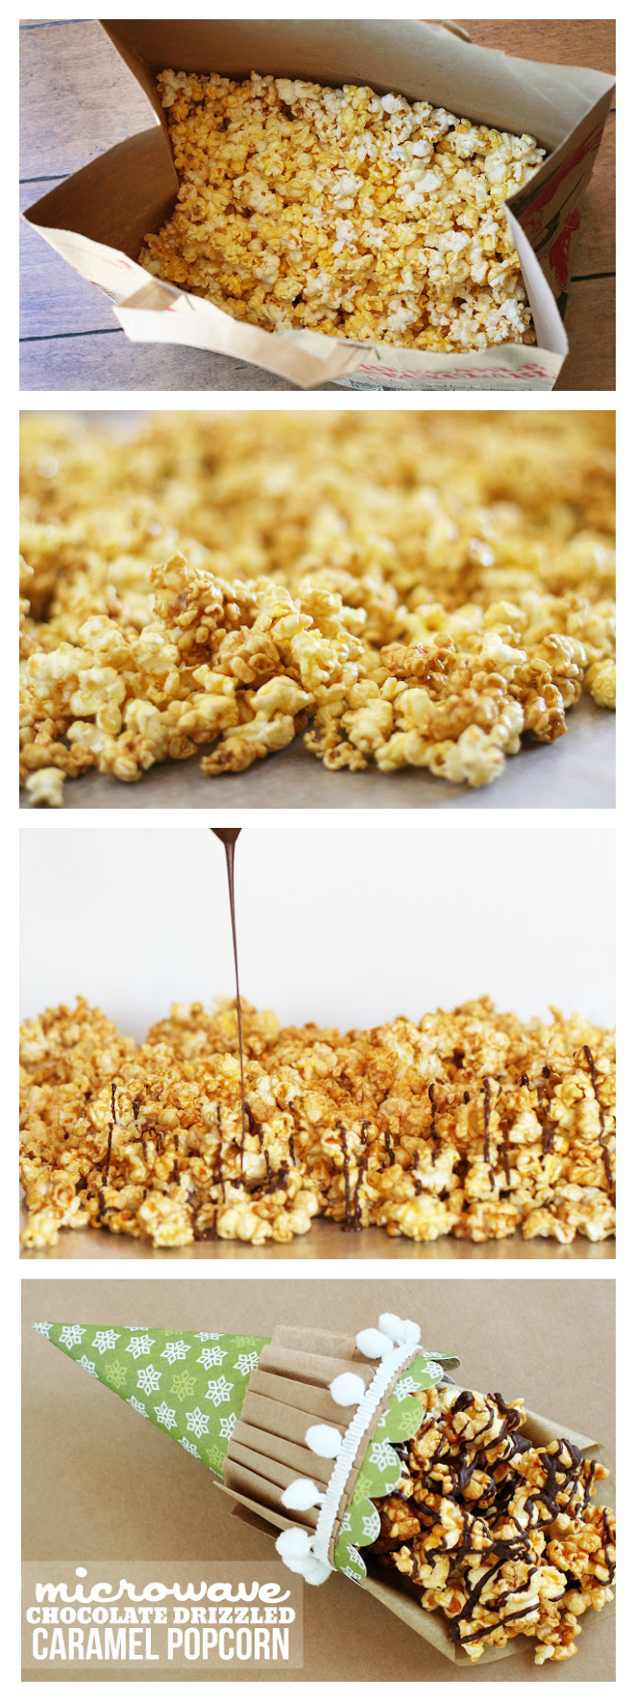 Microwave chocolate drizzled caramel popcorn